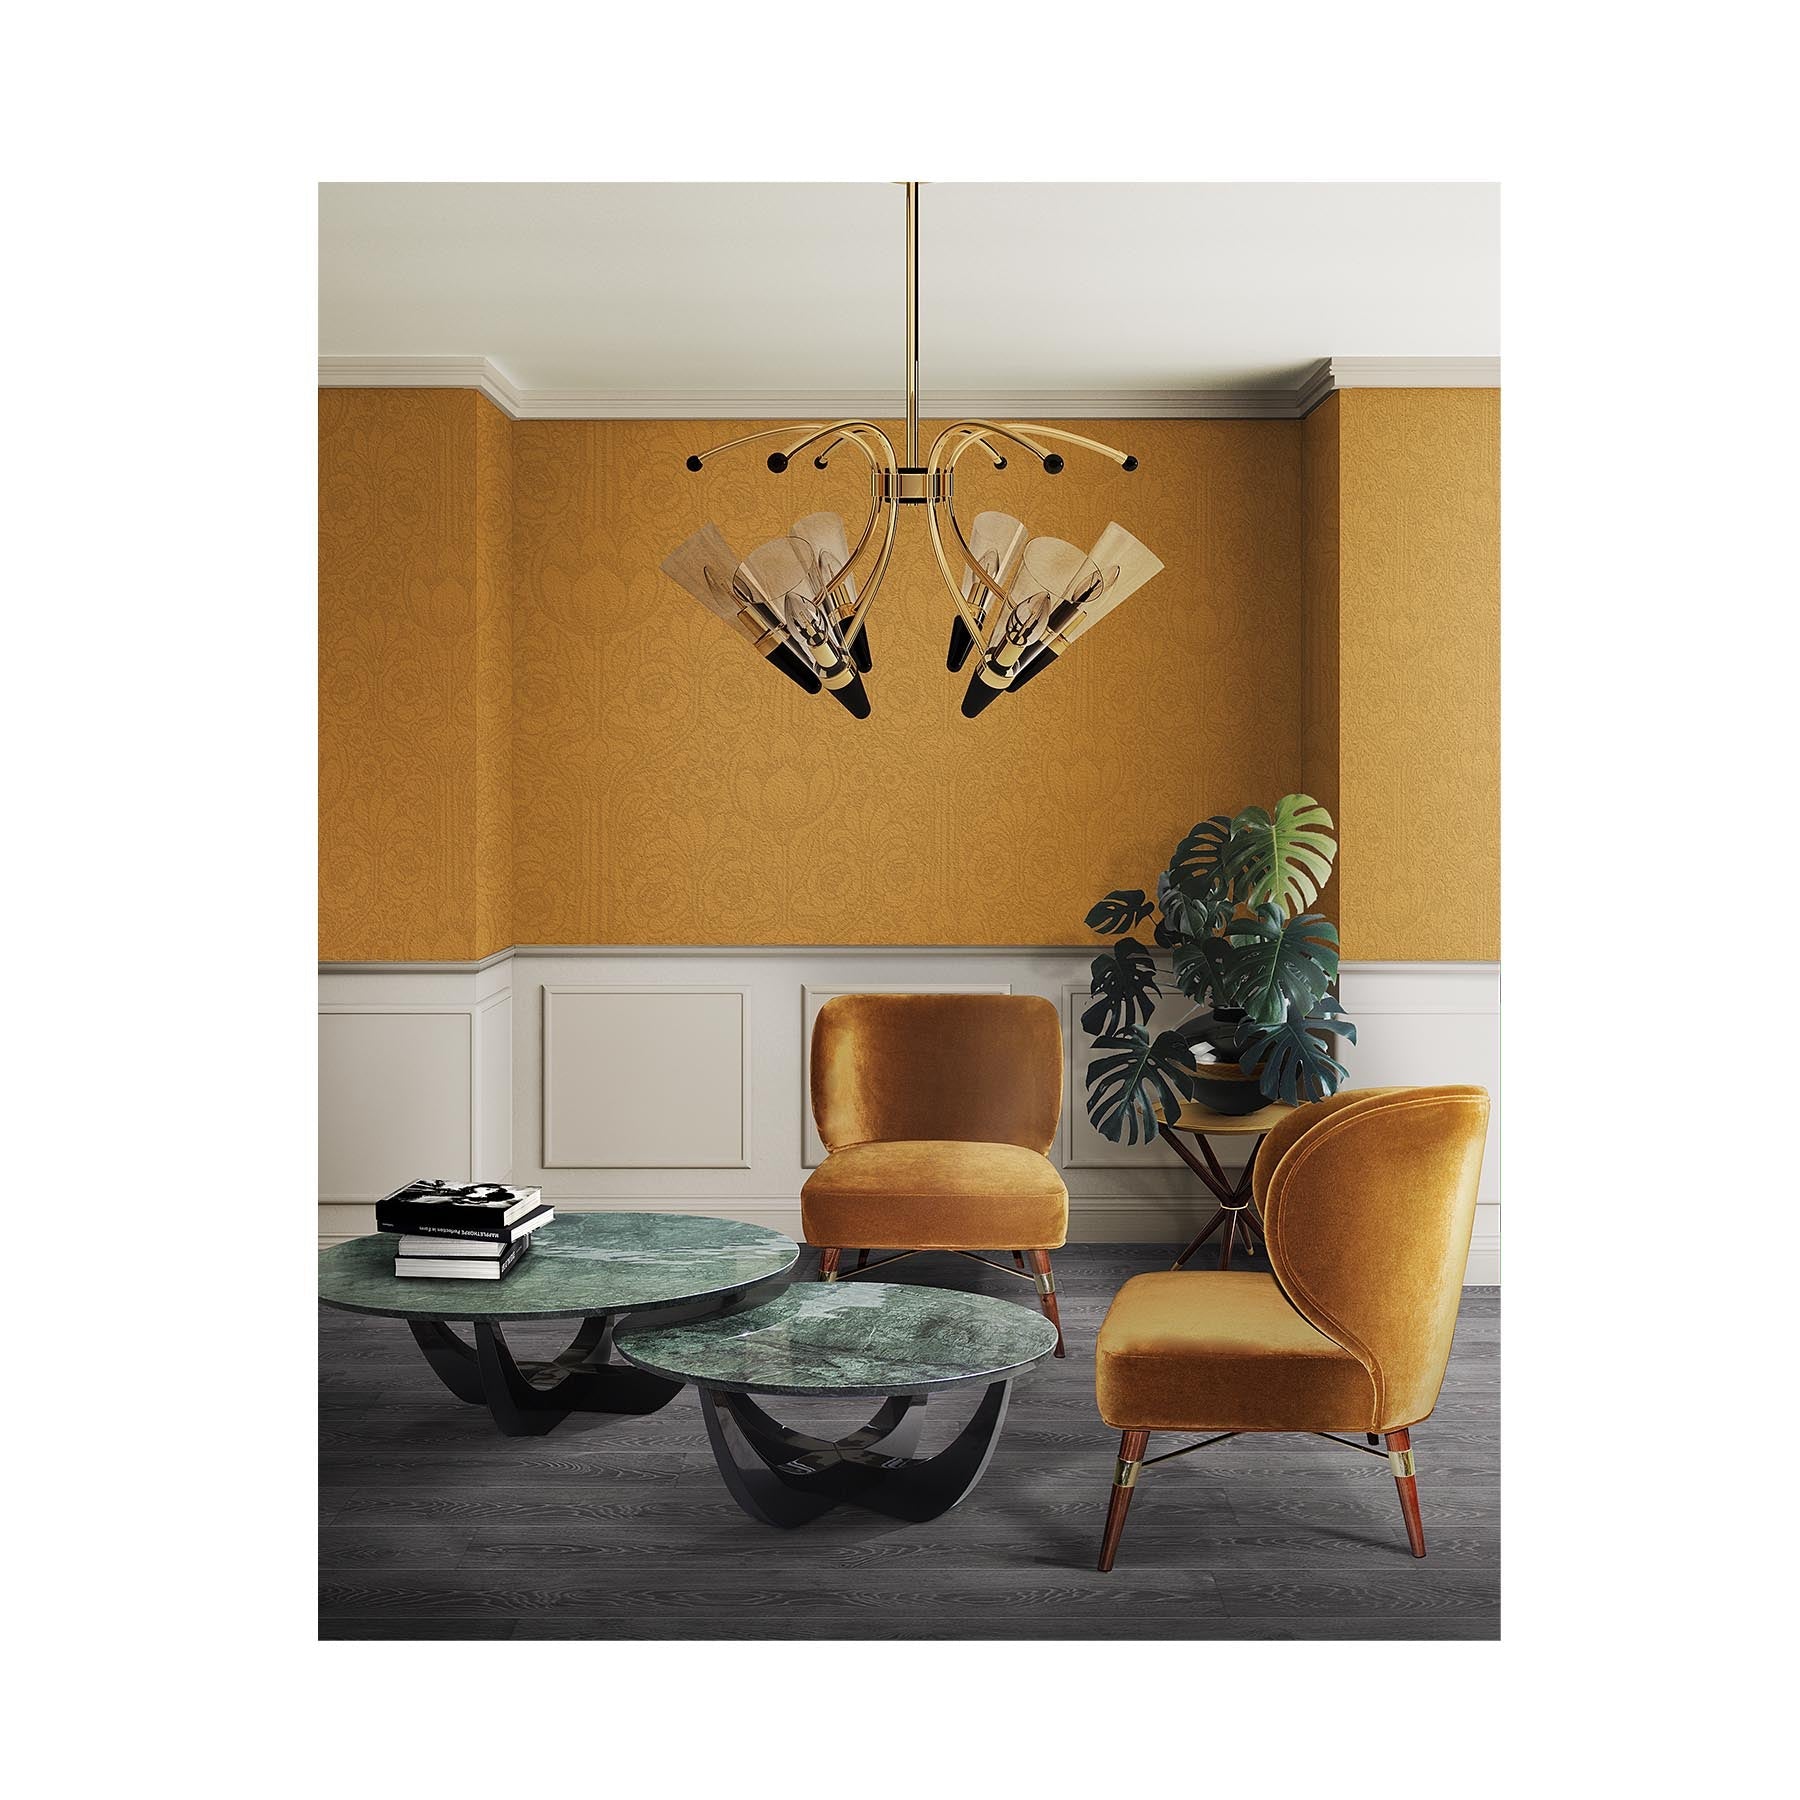 LOUIS - ARMCHAIR | Modern Furniture + Decor